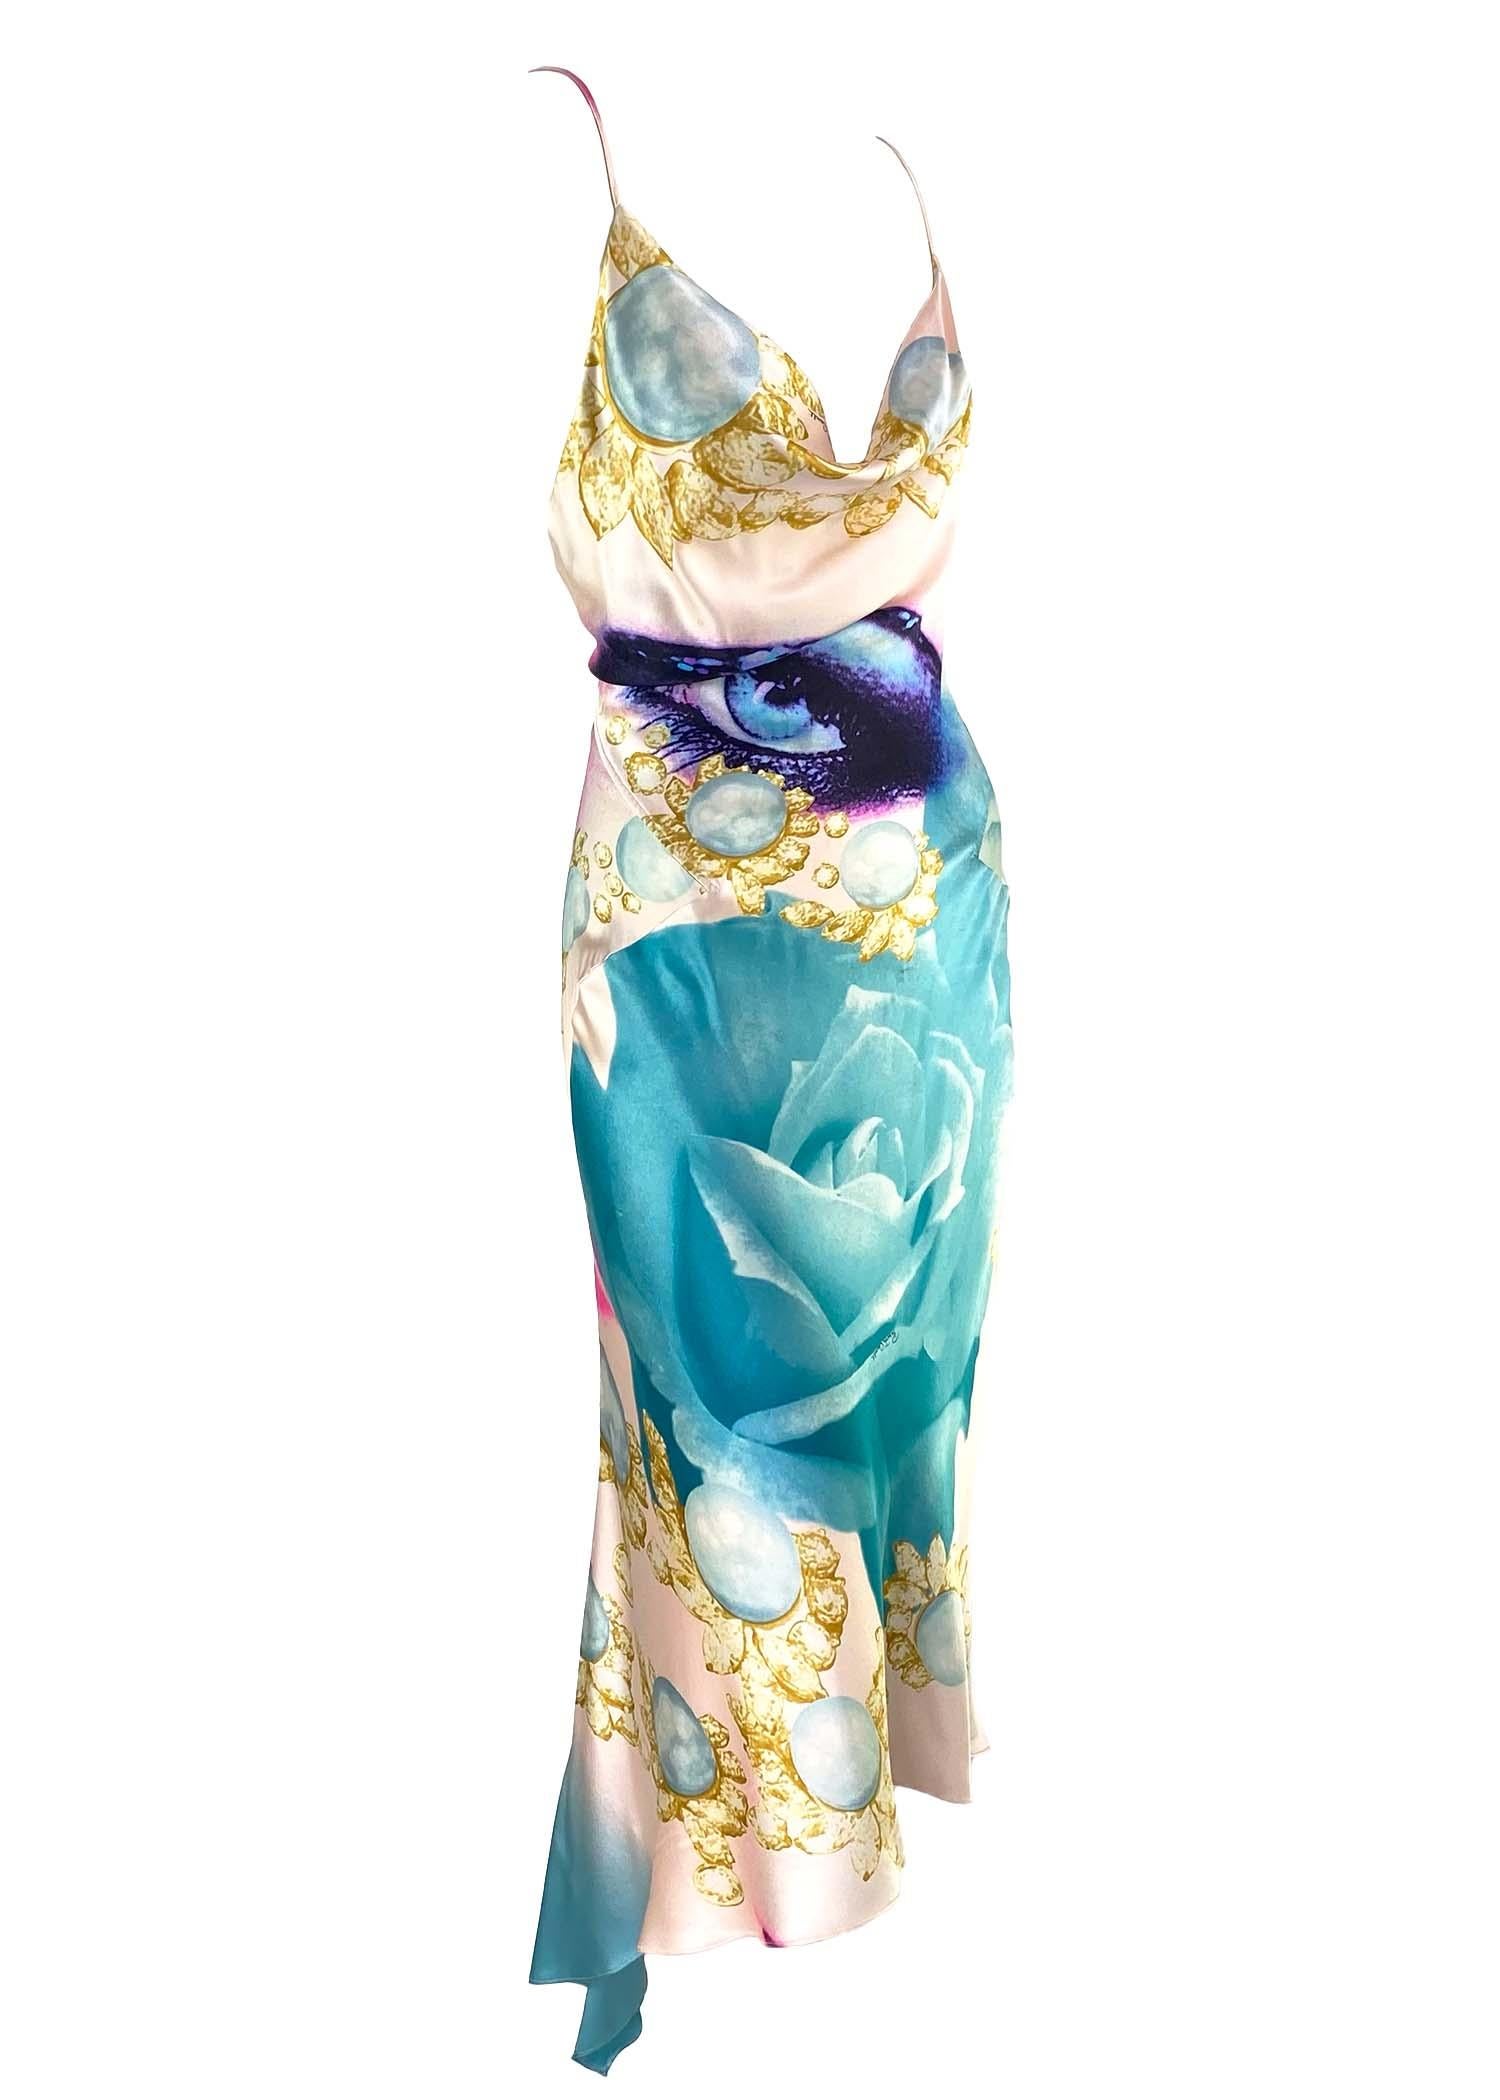 S/S 2001 Roberto Cavalli Liz Taylor Print Silk Dress For Sale at 1stDibs